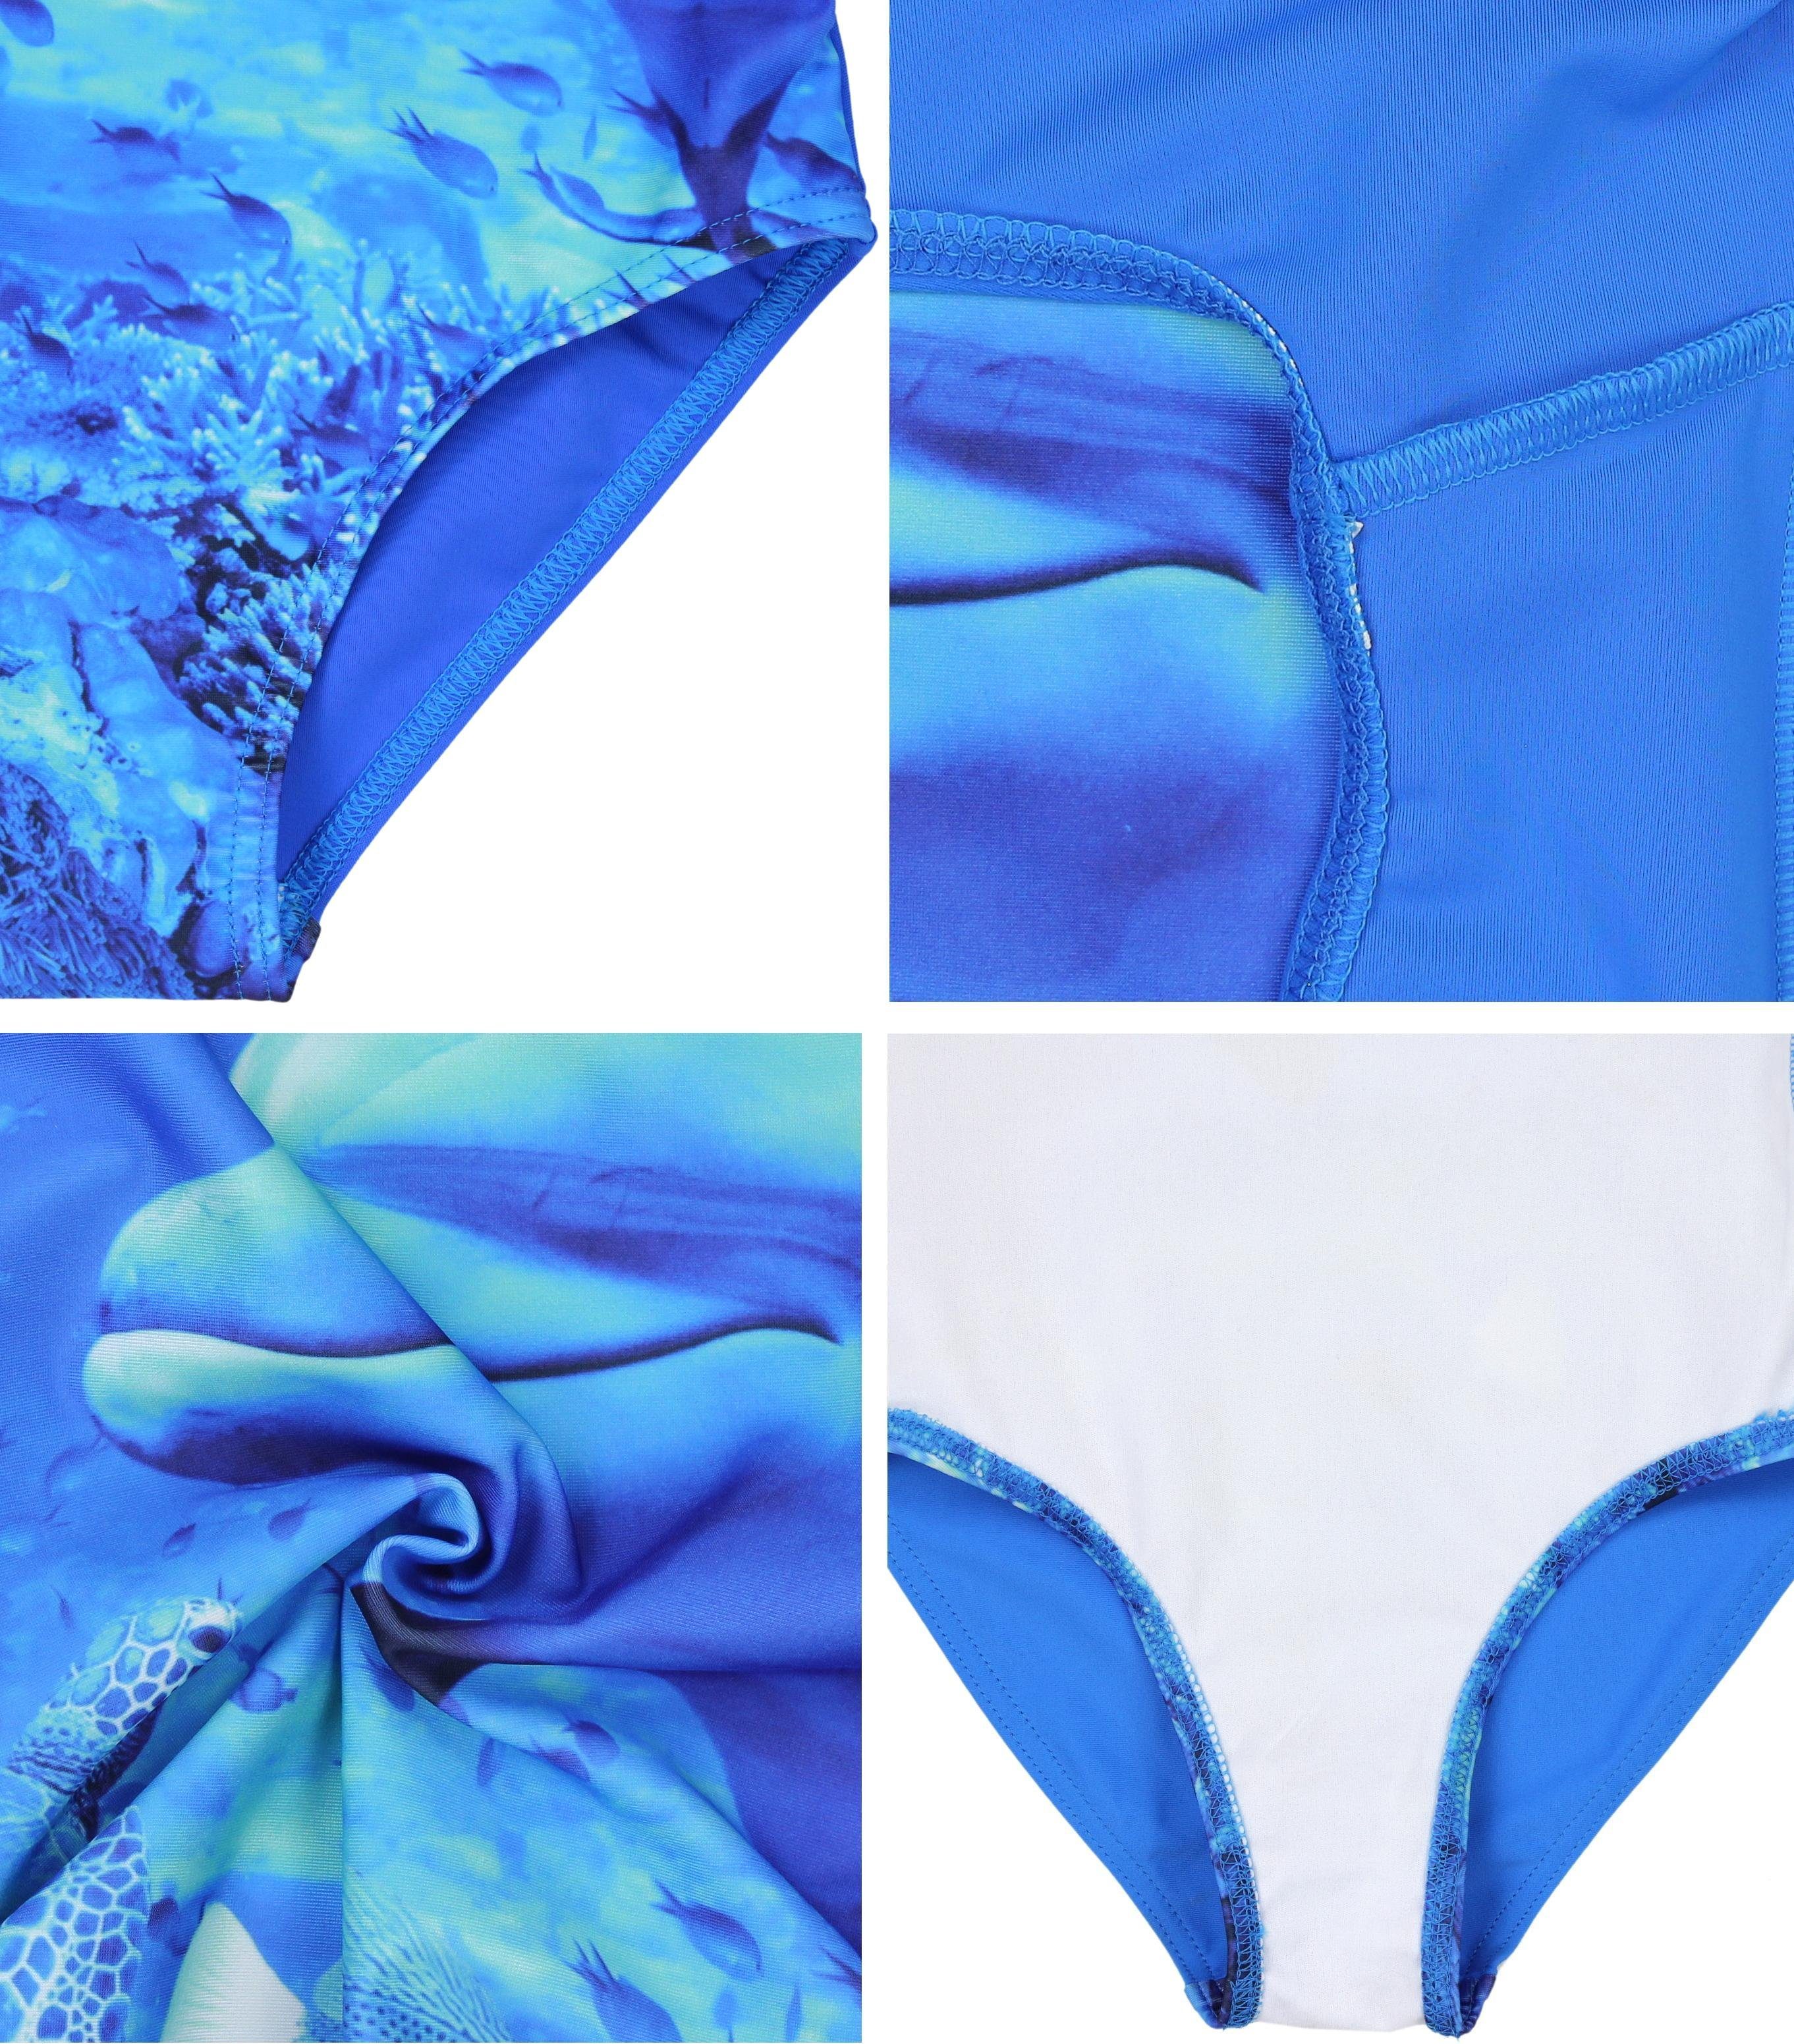 Delphin Mädchen Badeanzug Aquarti Ringerrücken mit / Print Blau Aquarti Badeanzug